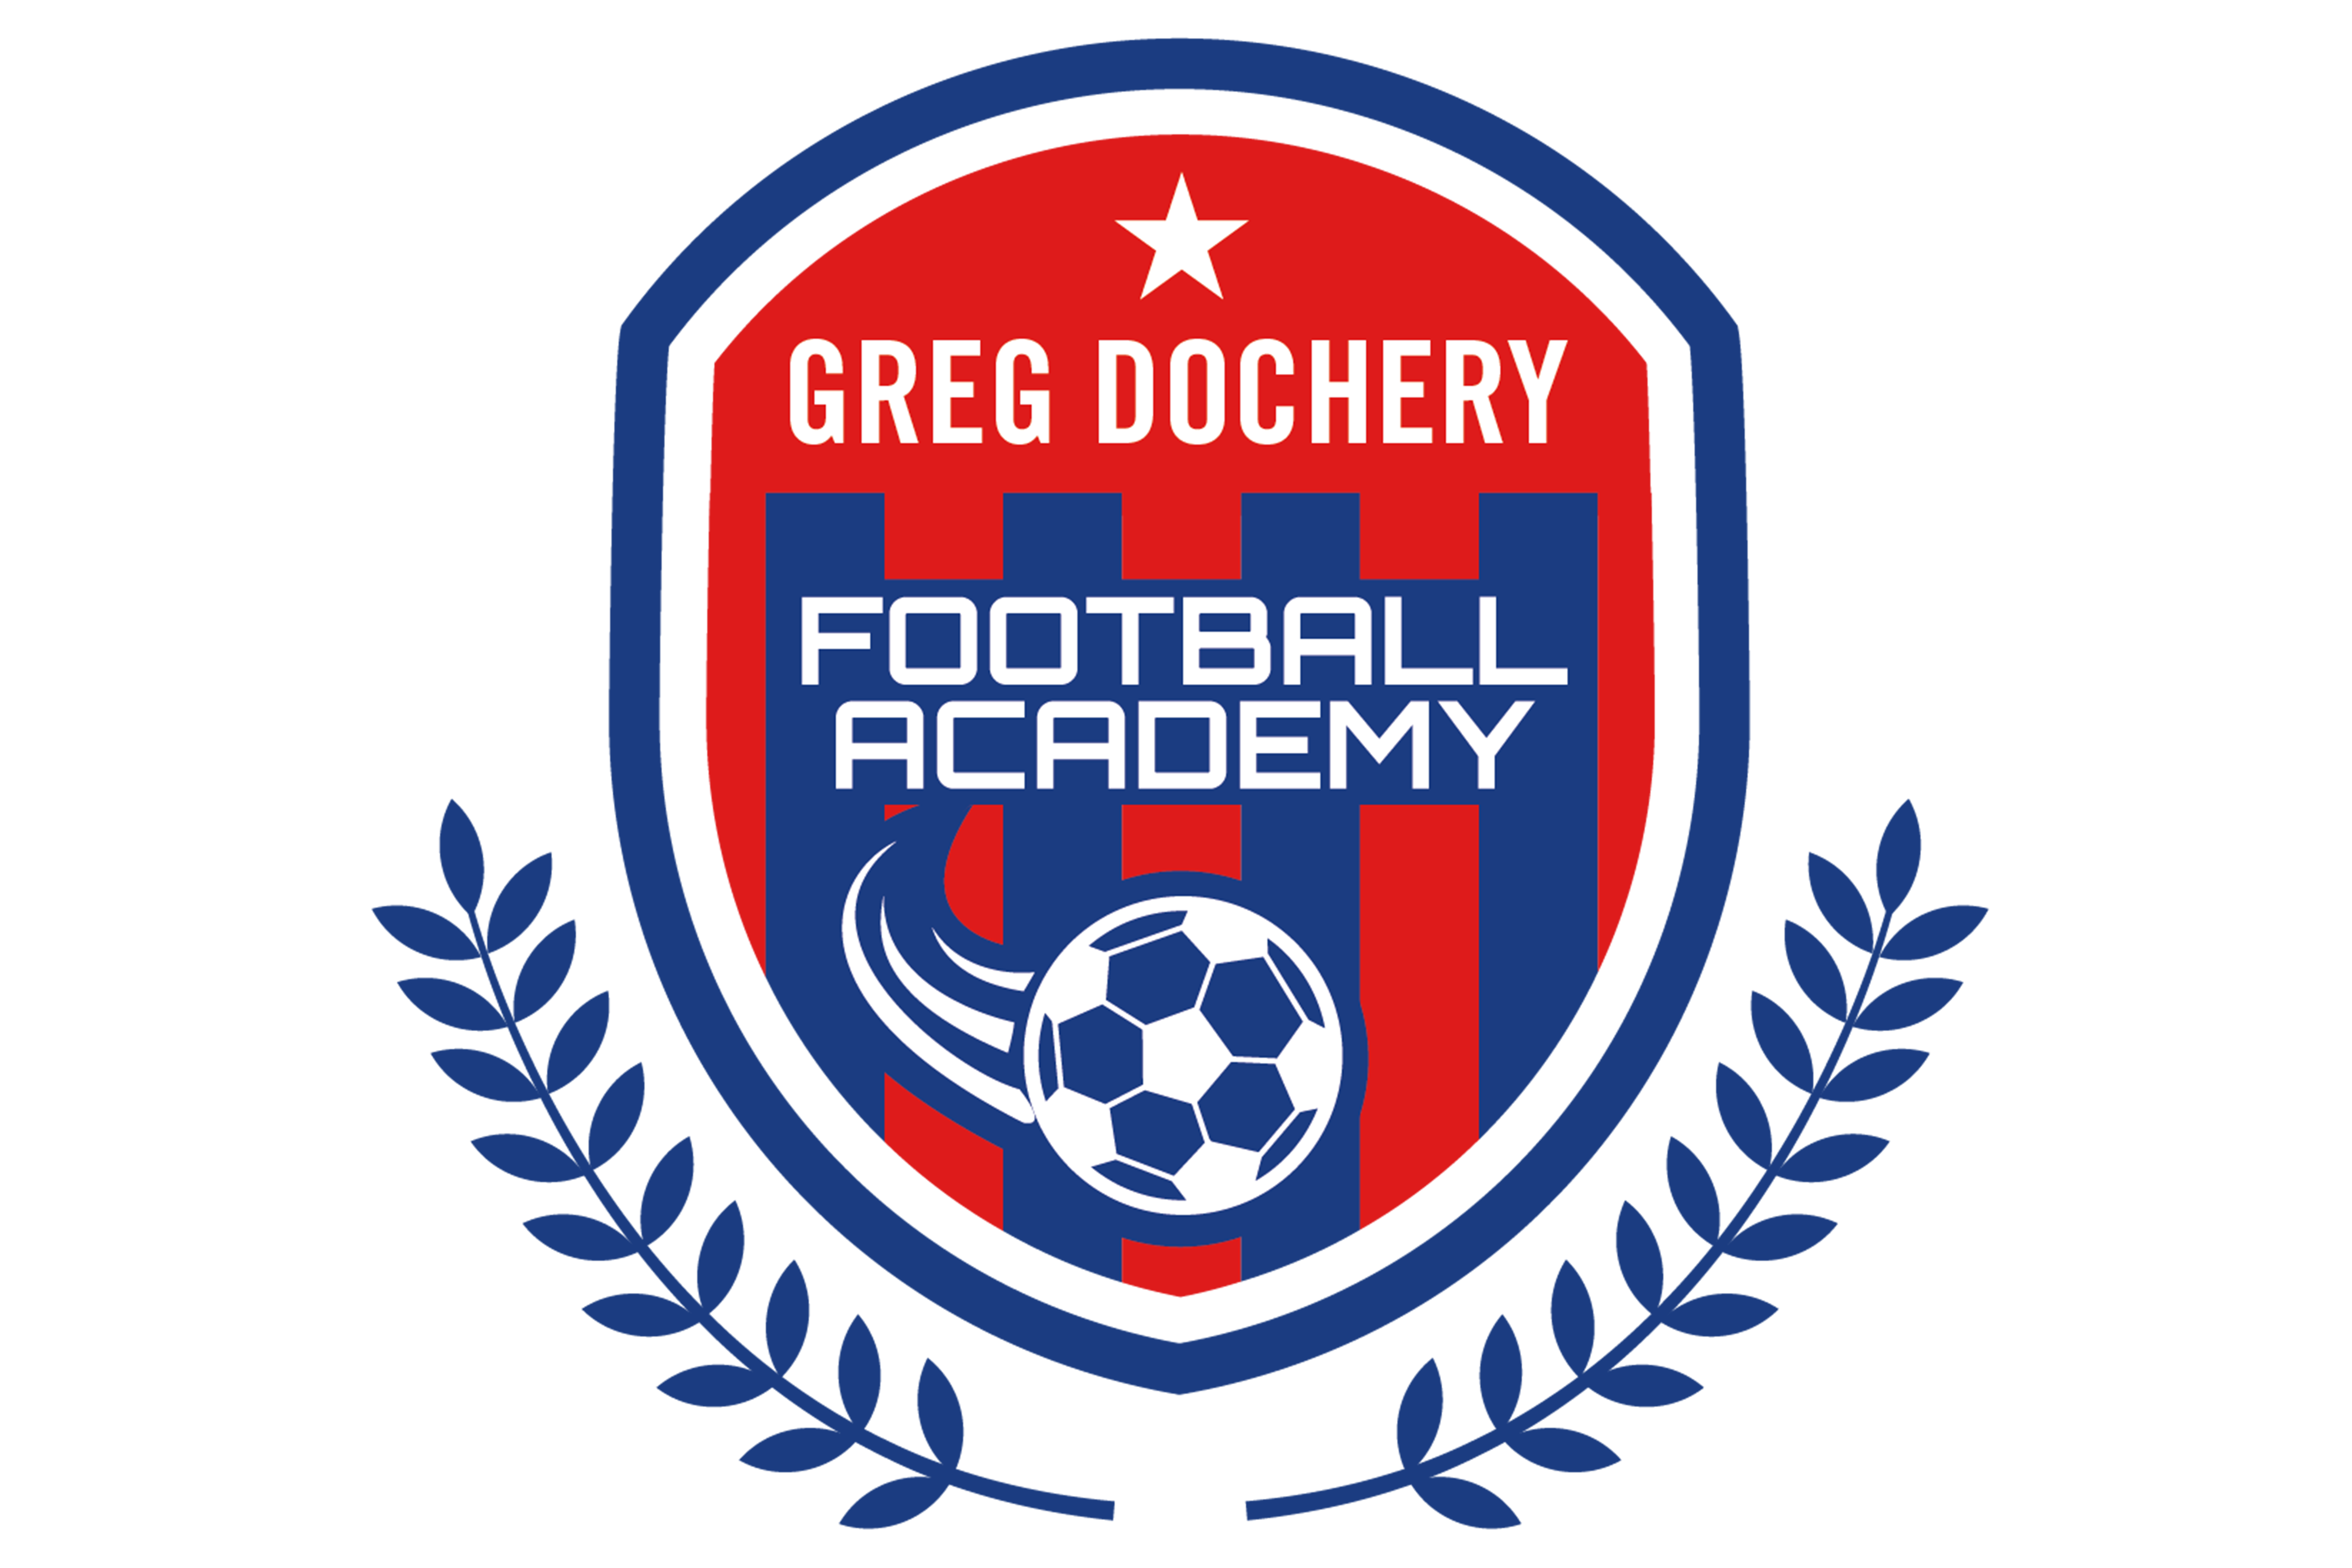 Greg Docherty Football Academy